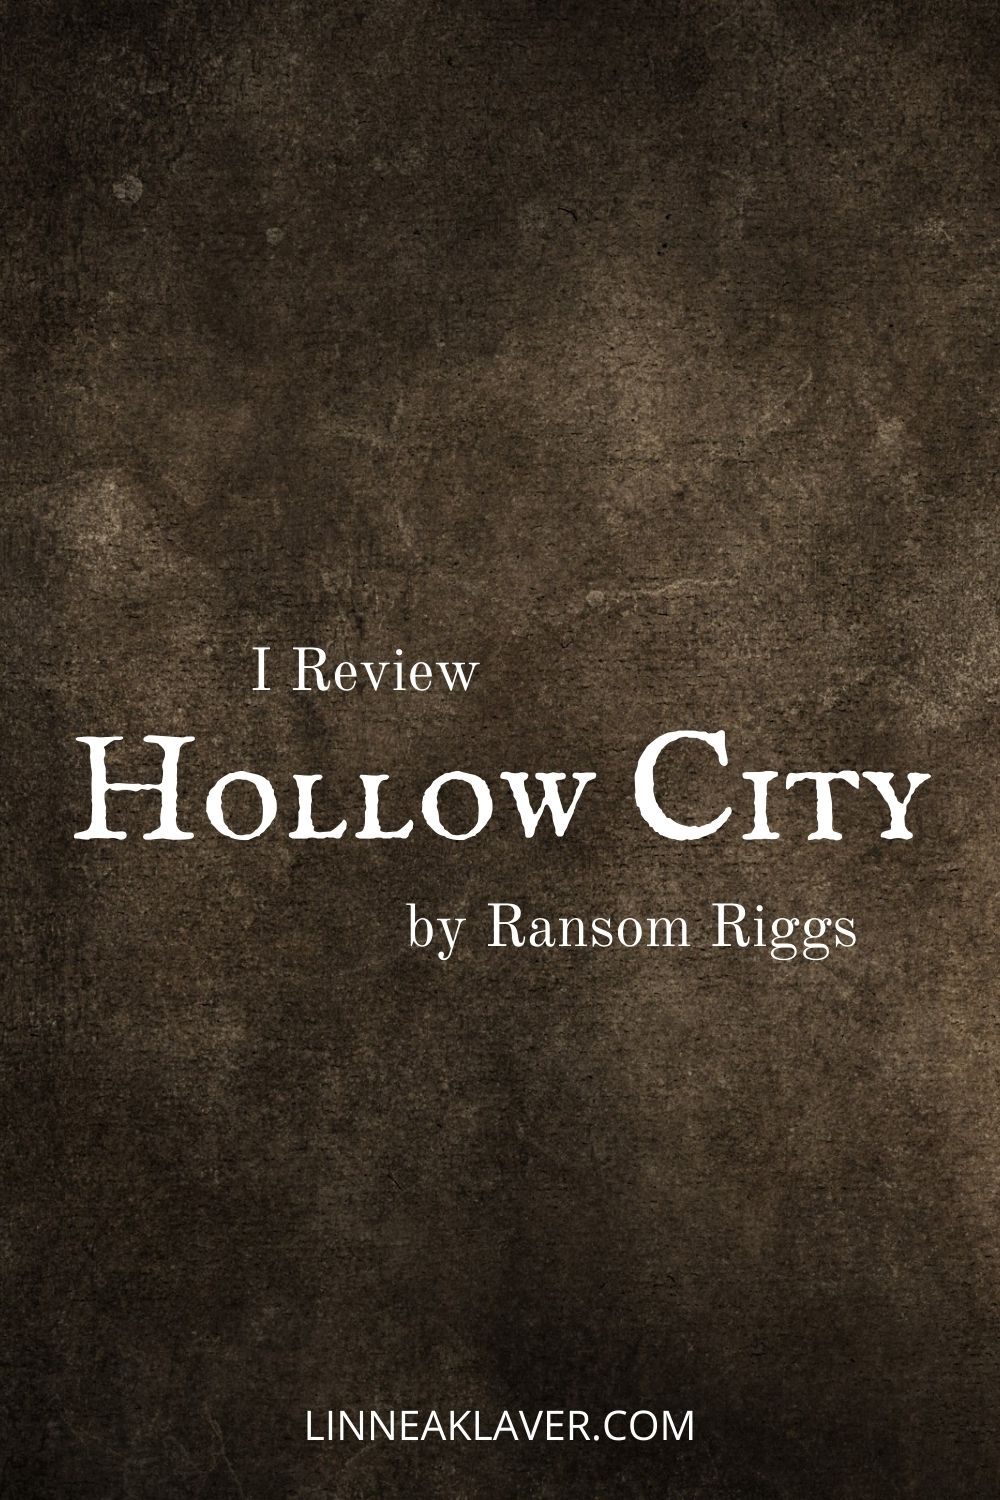 hollow city book series